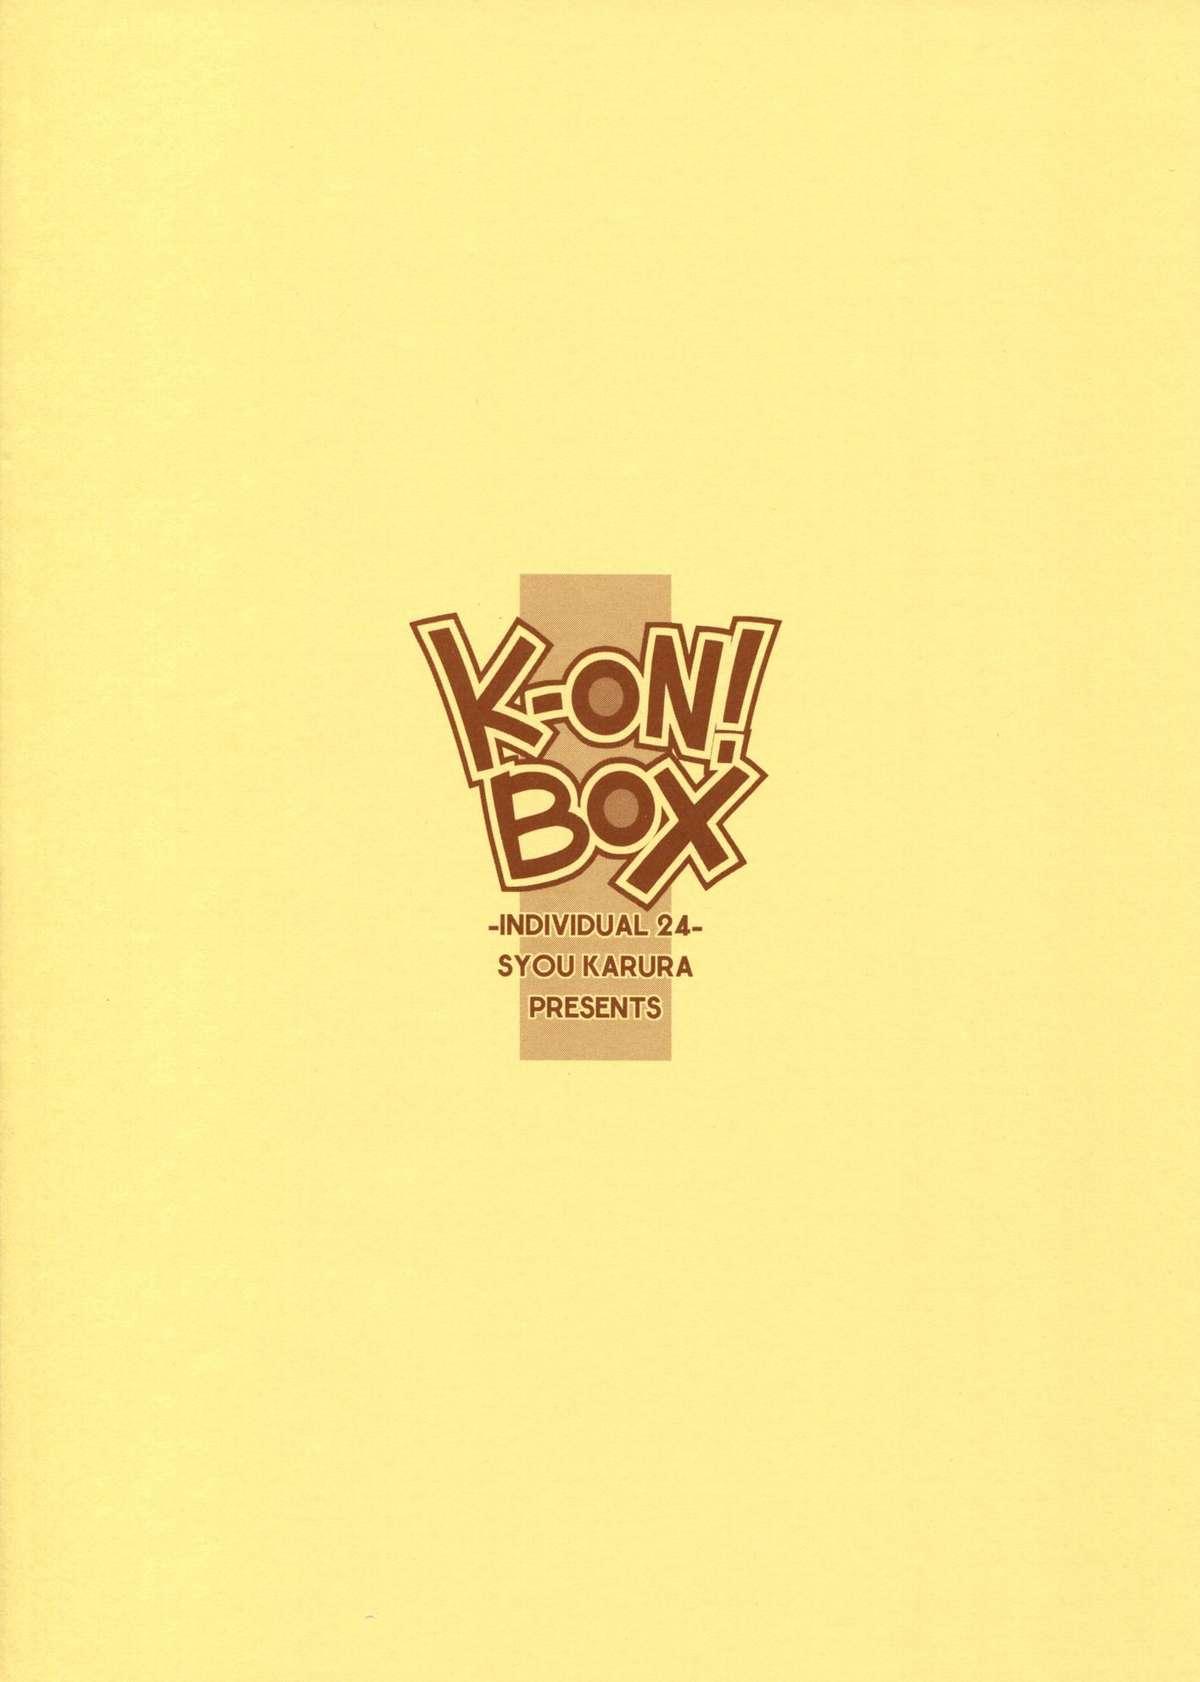 K-ON! BOX 13